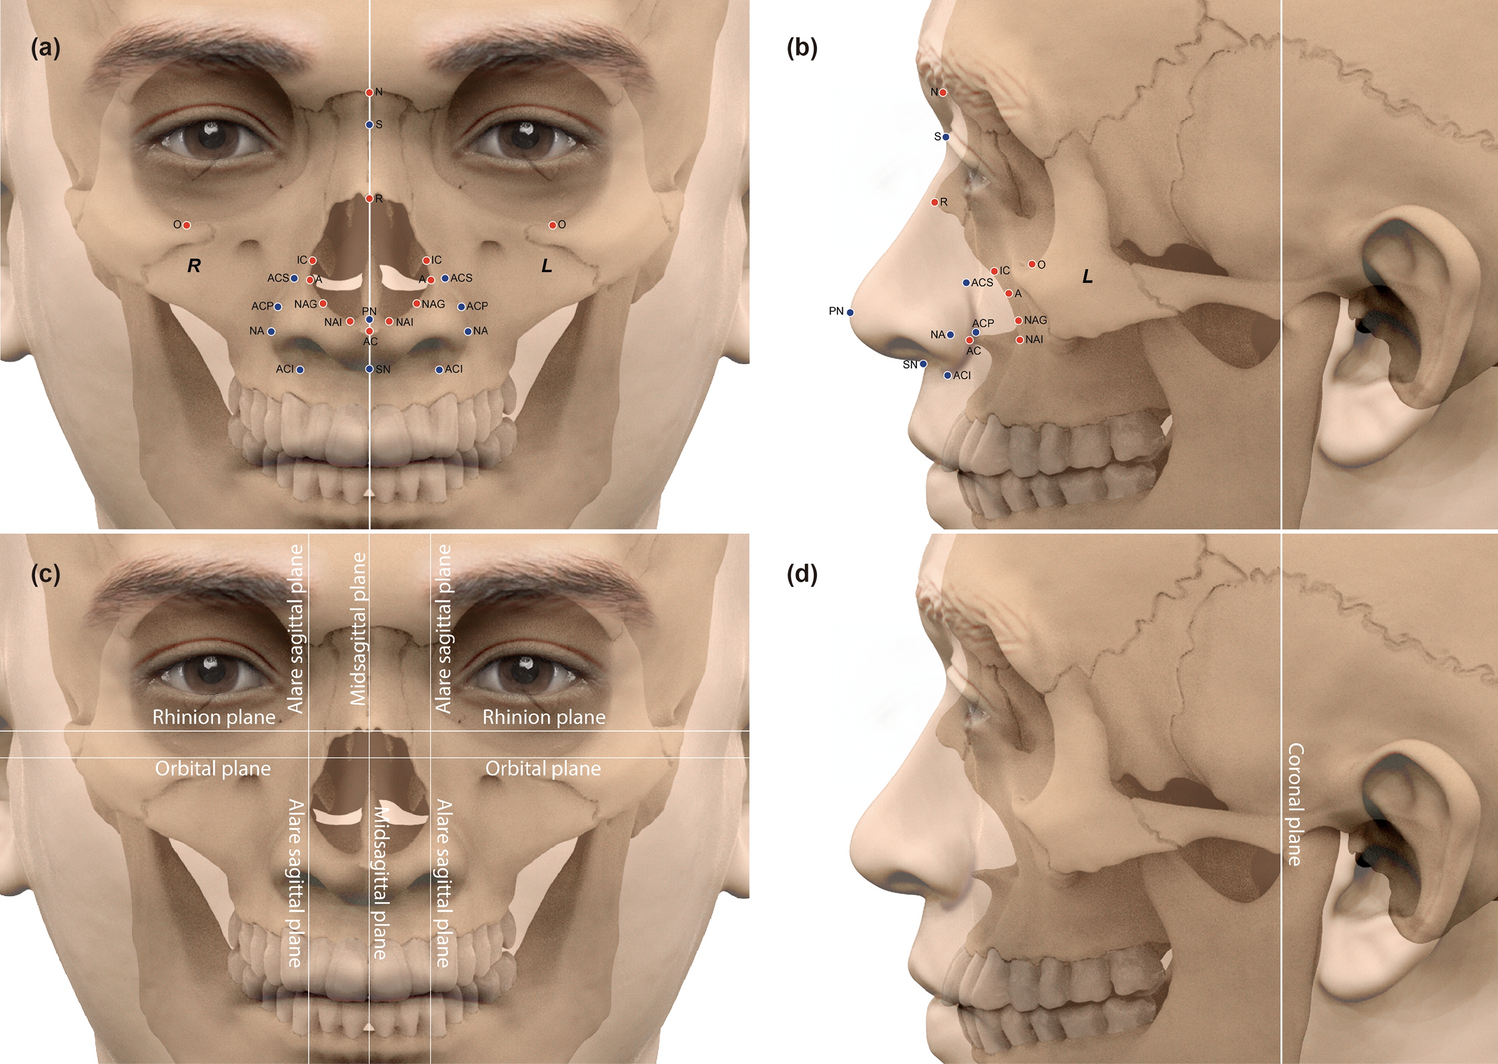 human nose bone anatomy